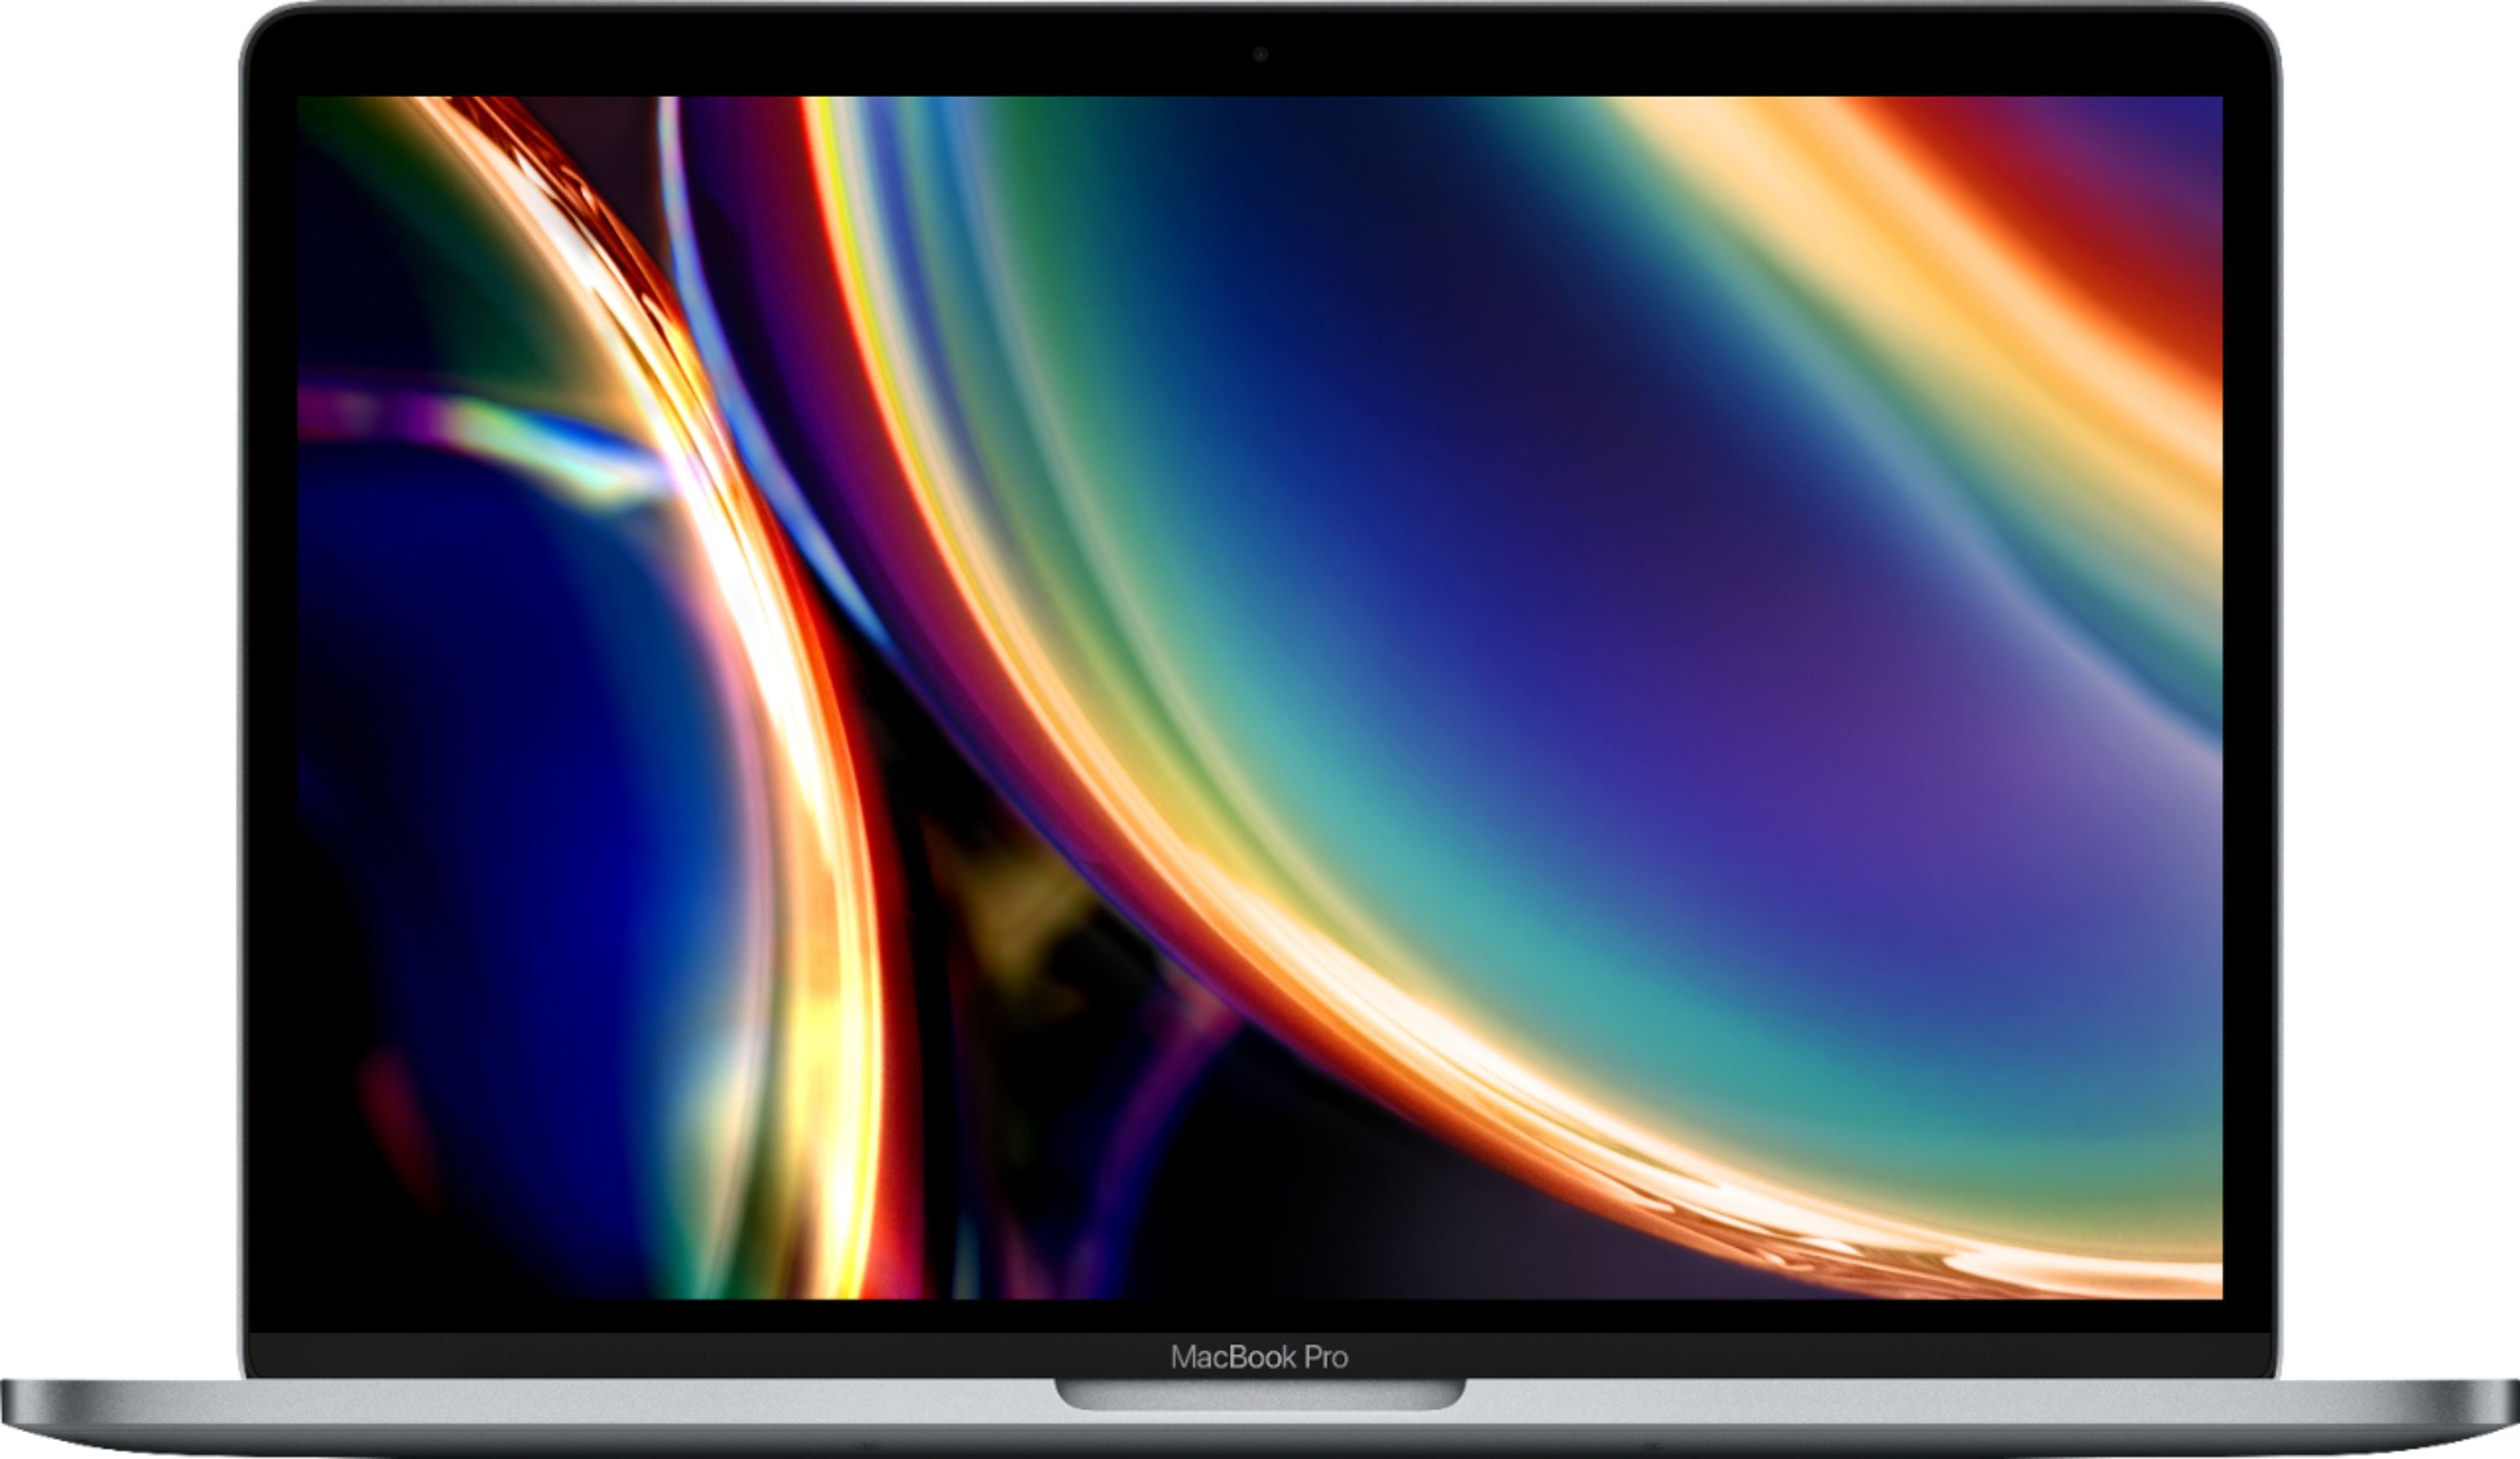 Apple MacBook Air 13-inch 1.8GHz Core i5 (Mid 2017) 8GB 128GB